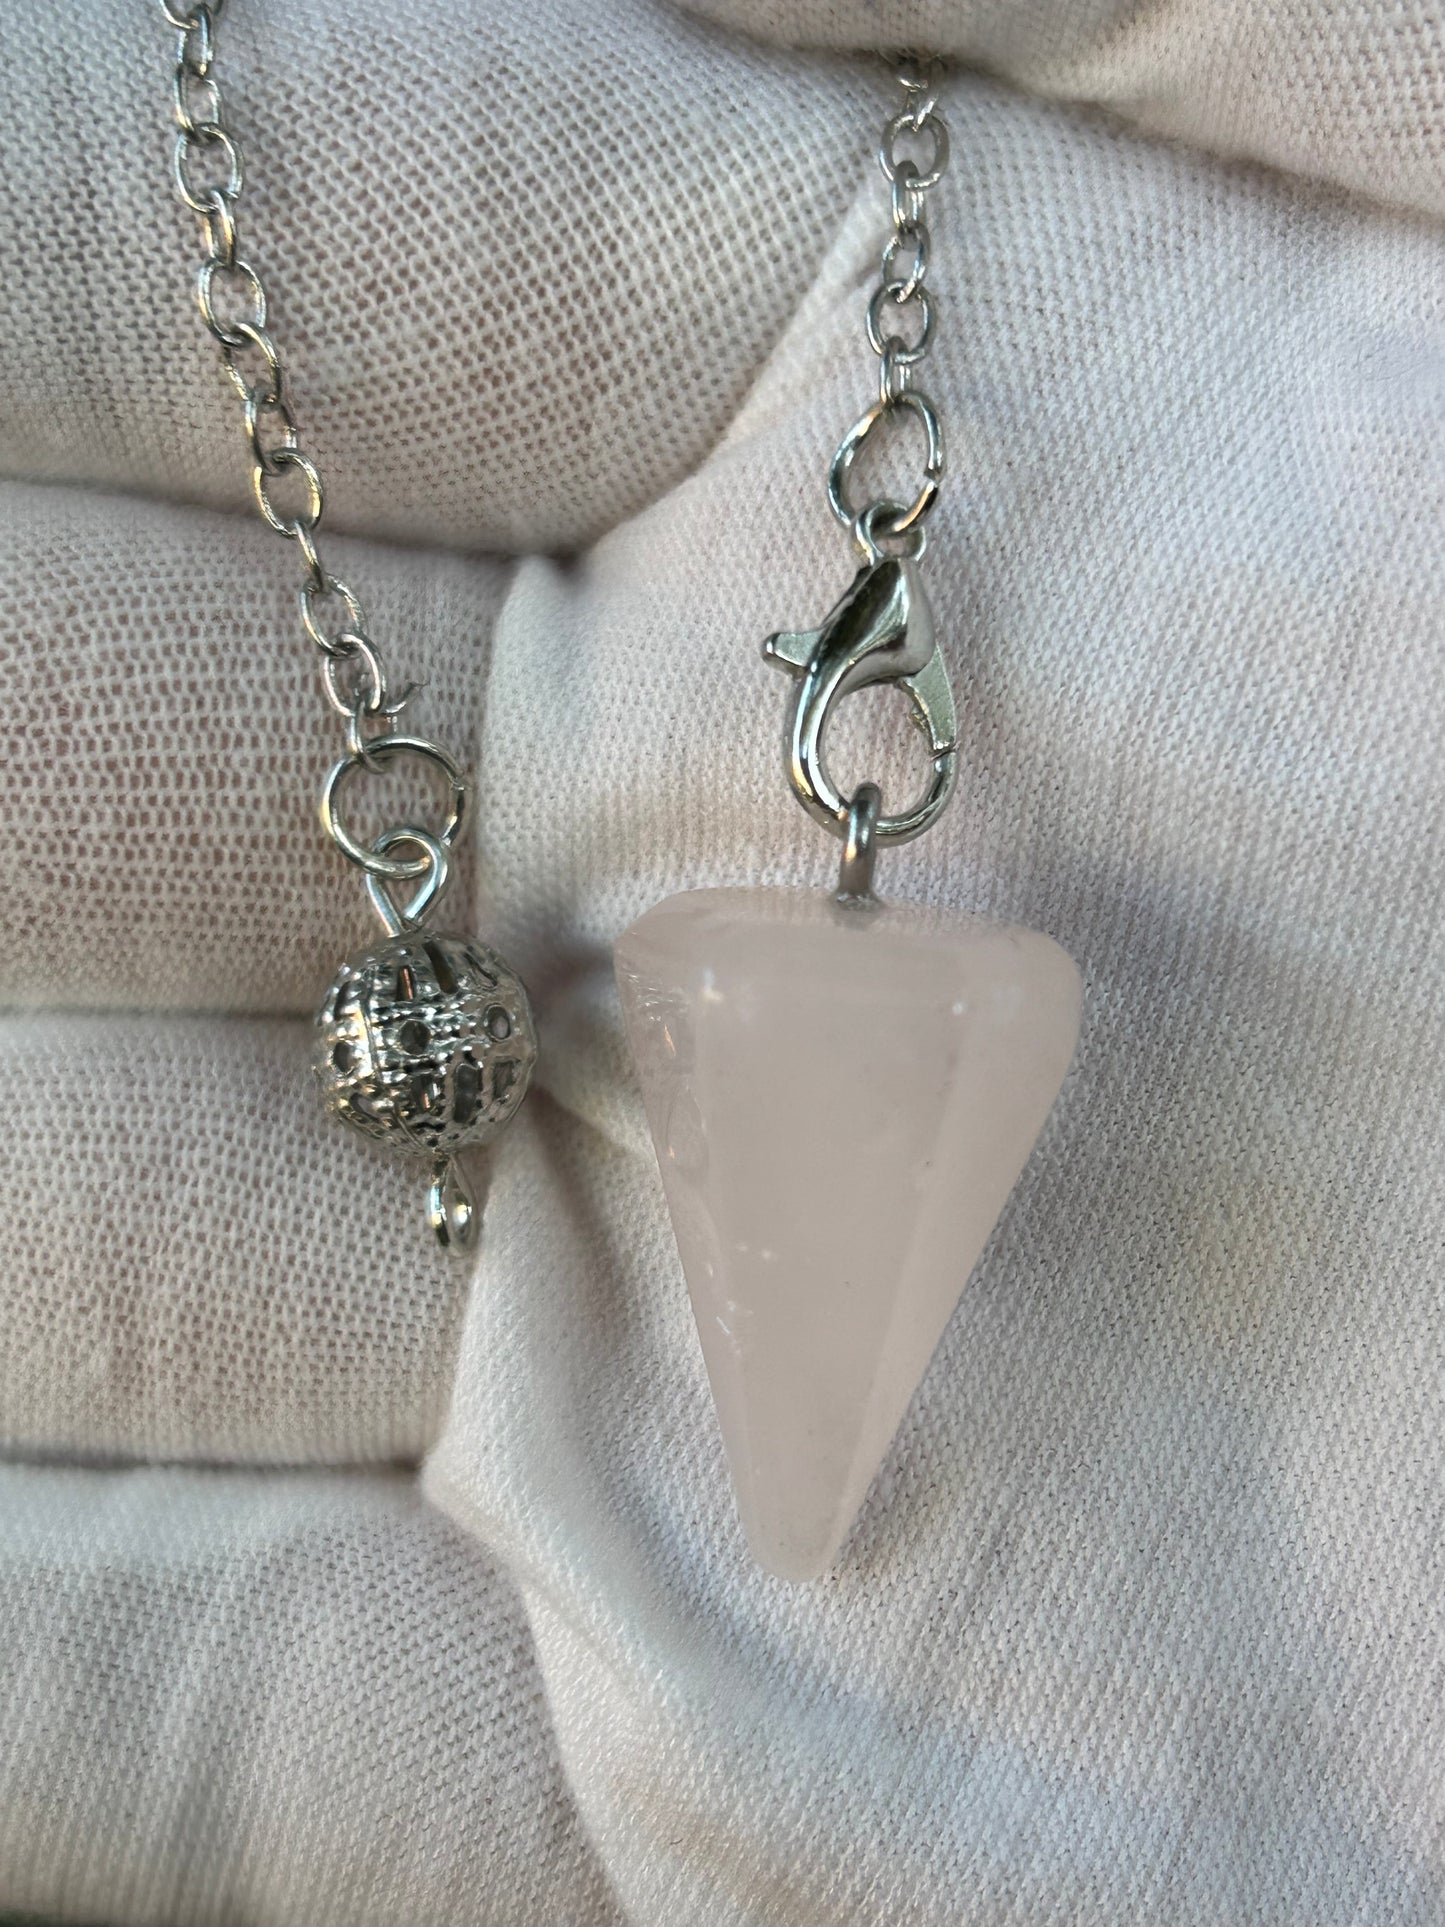 Rose quartz crystal pendulum with silver chain